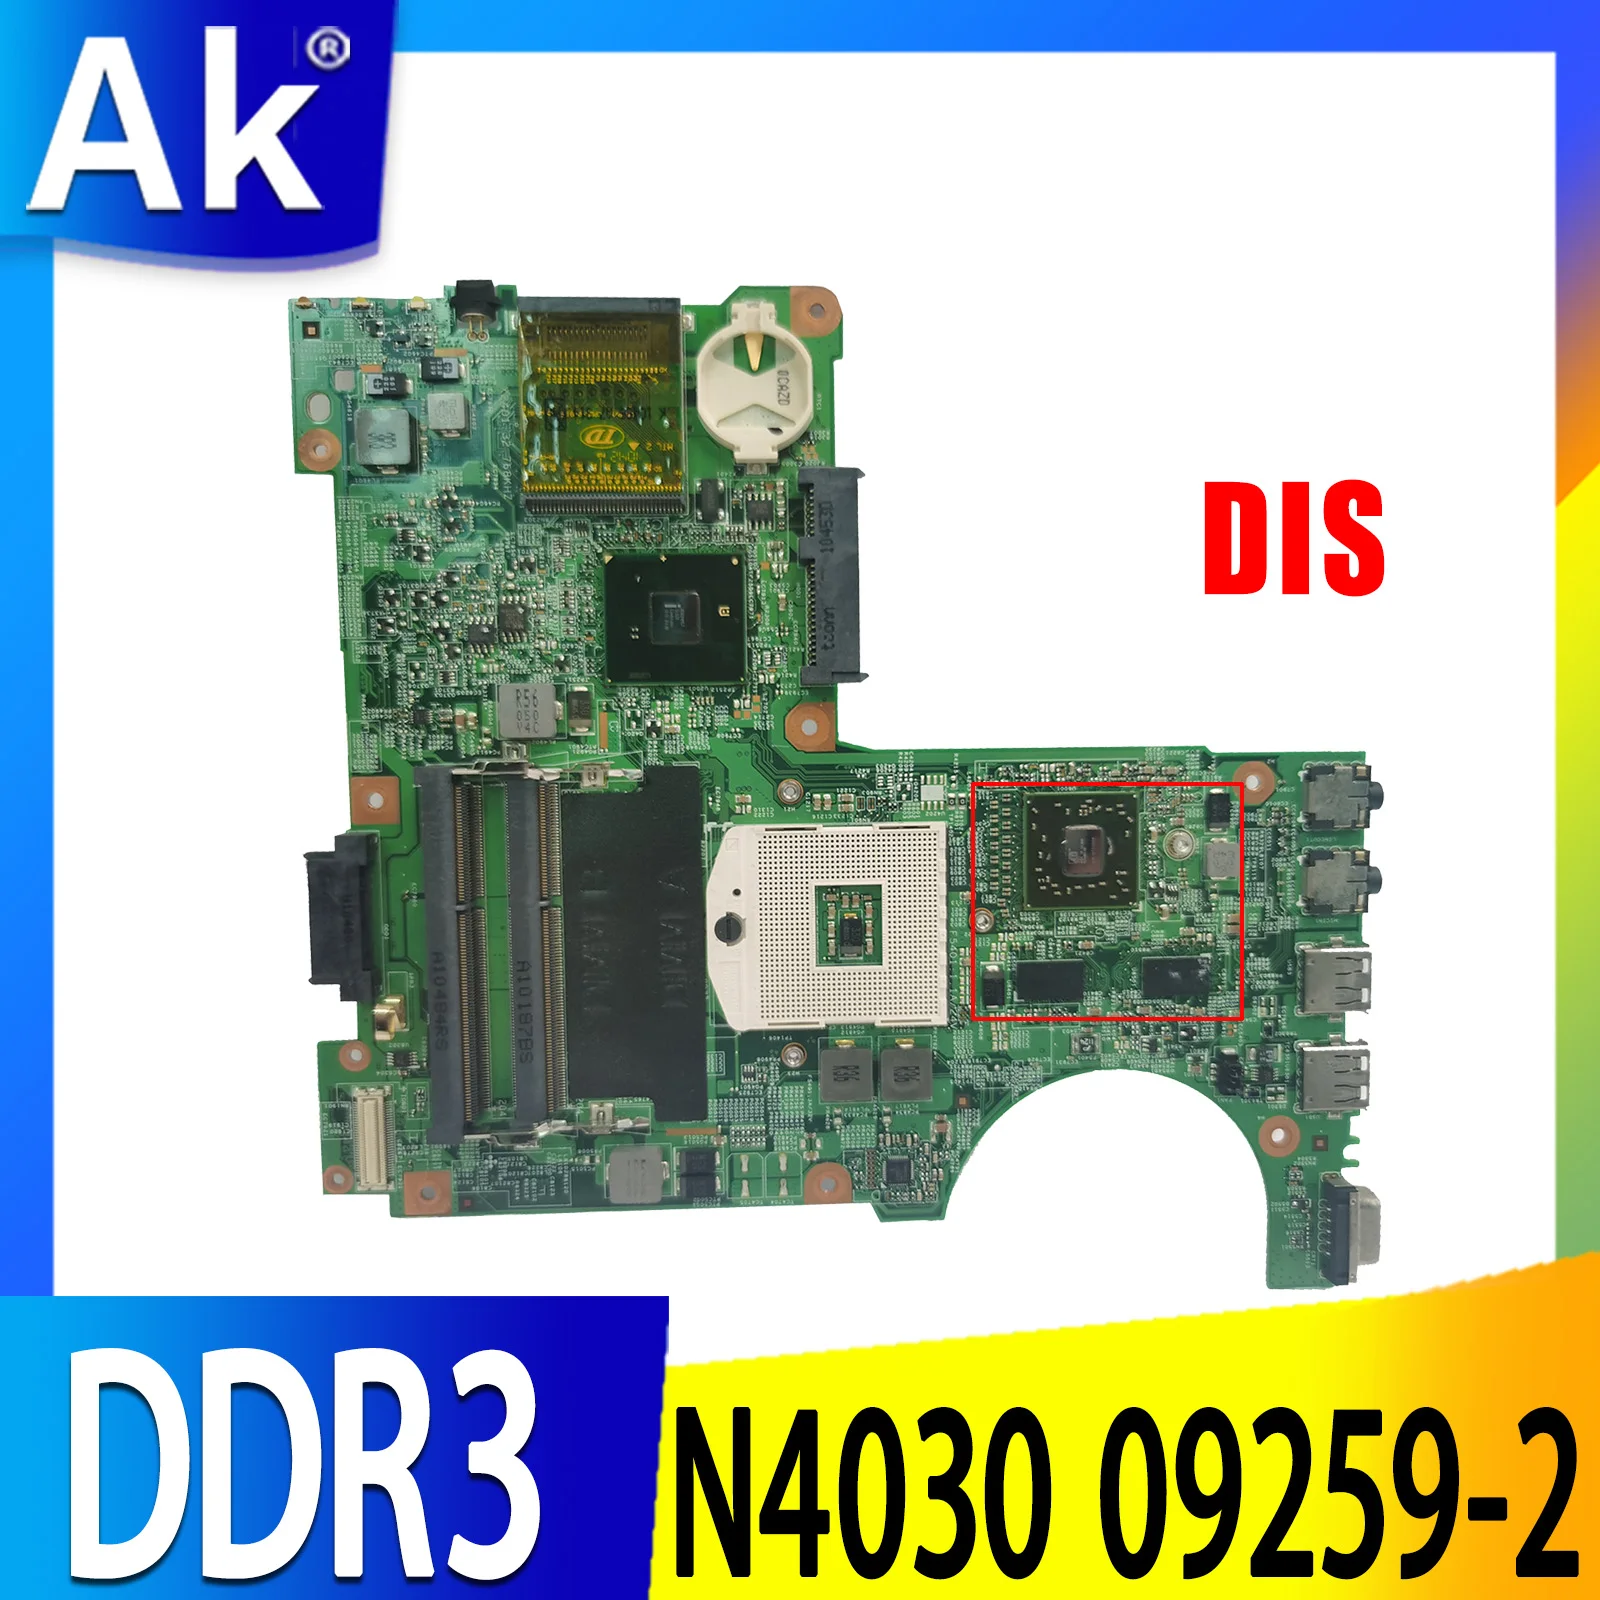 

For Dell inspiron N4030 Laptop Motherboard HM57 DDR3 0H38DX CN-03XMYG CN-0R2XK8 48.4EK19.011 Mainboard Free CPU 09259-2